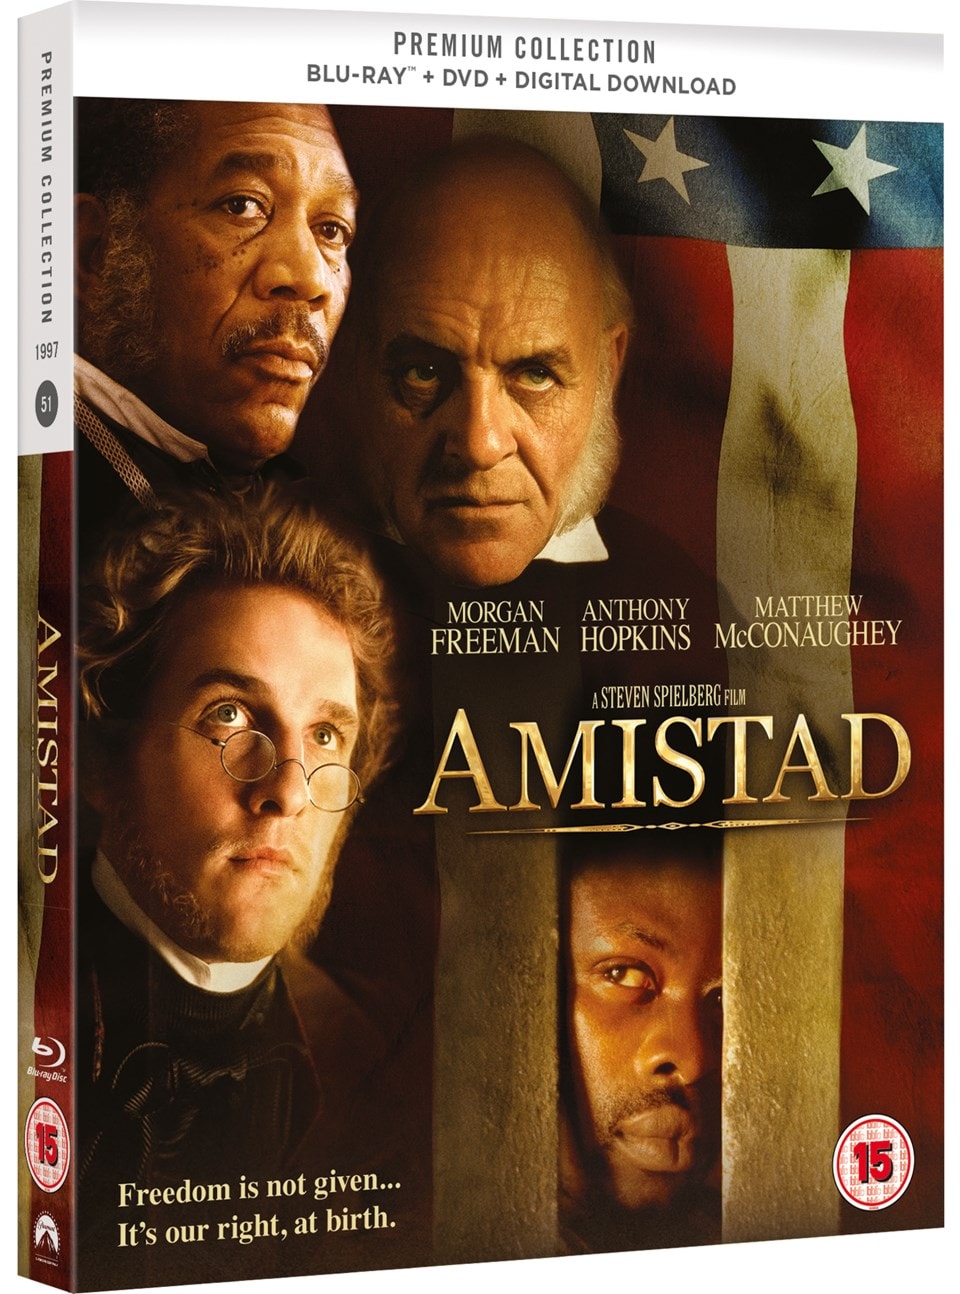 Amistad (hmv Exclusive) - The Premium Collection | Blu-ray | Free ...